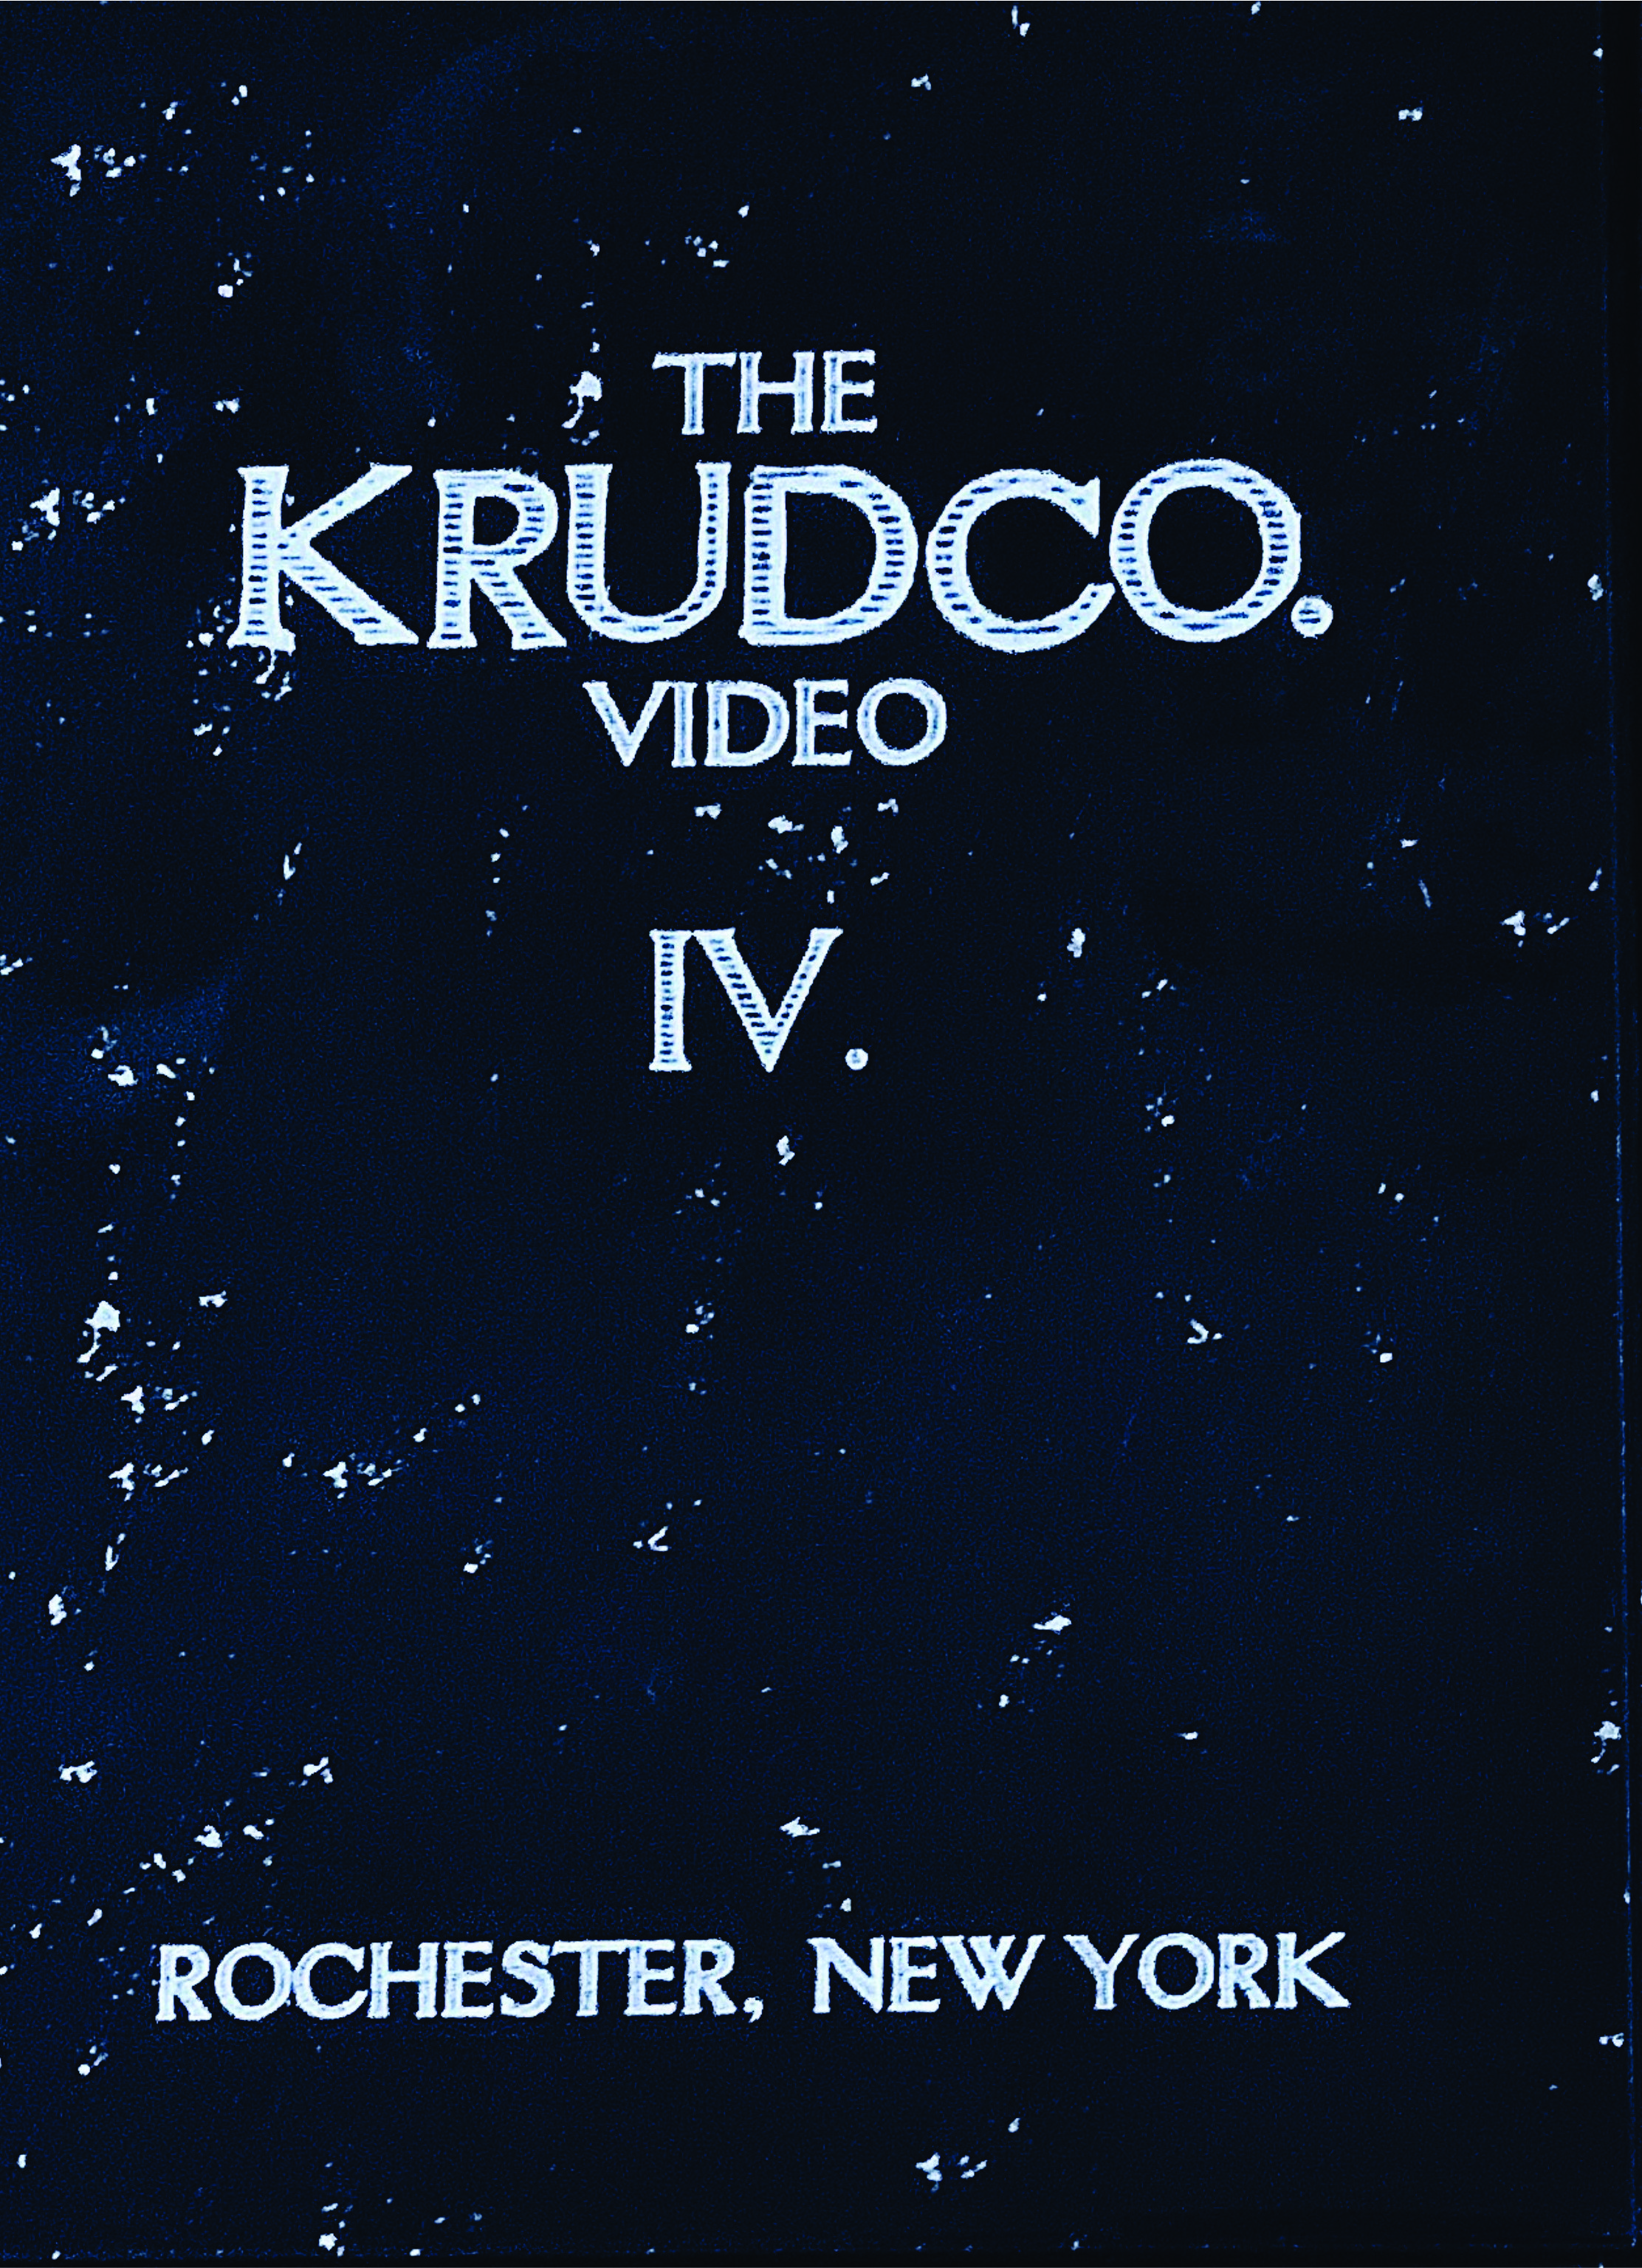 Krudco - Video IV, The Grey Video cover